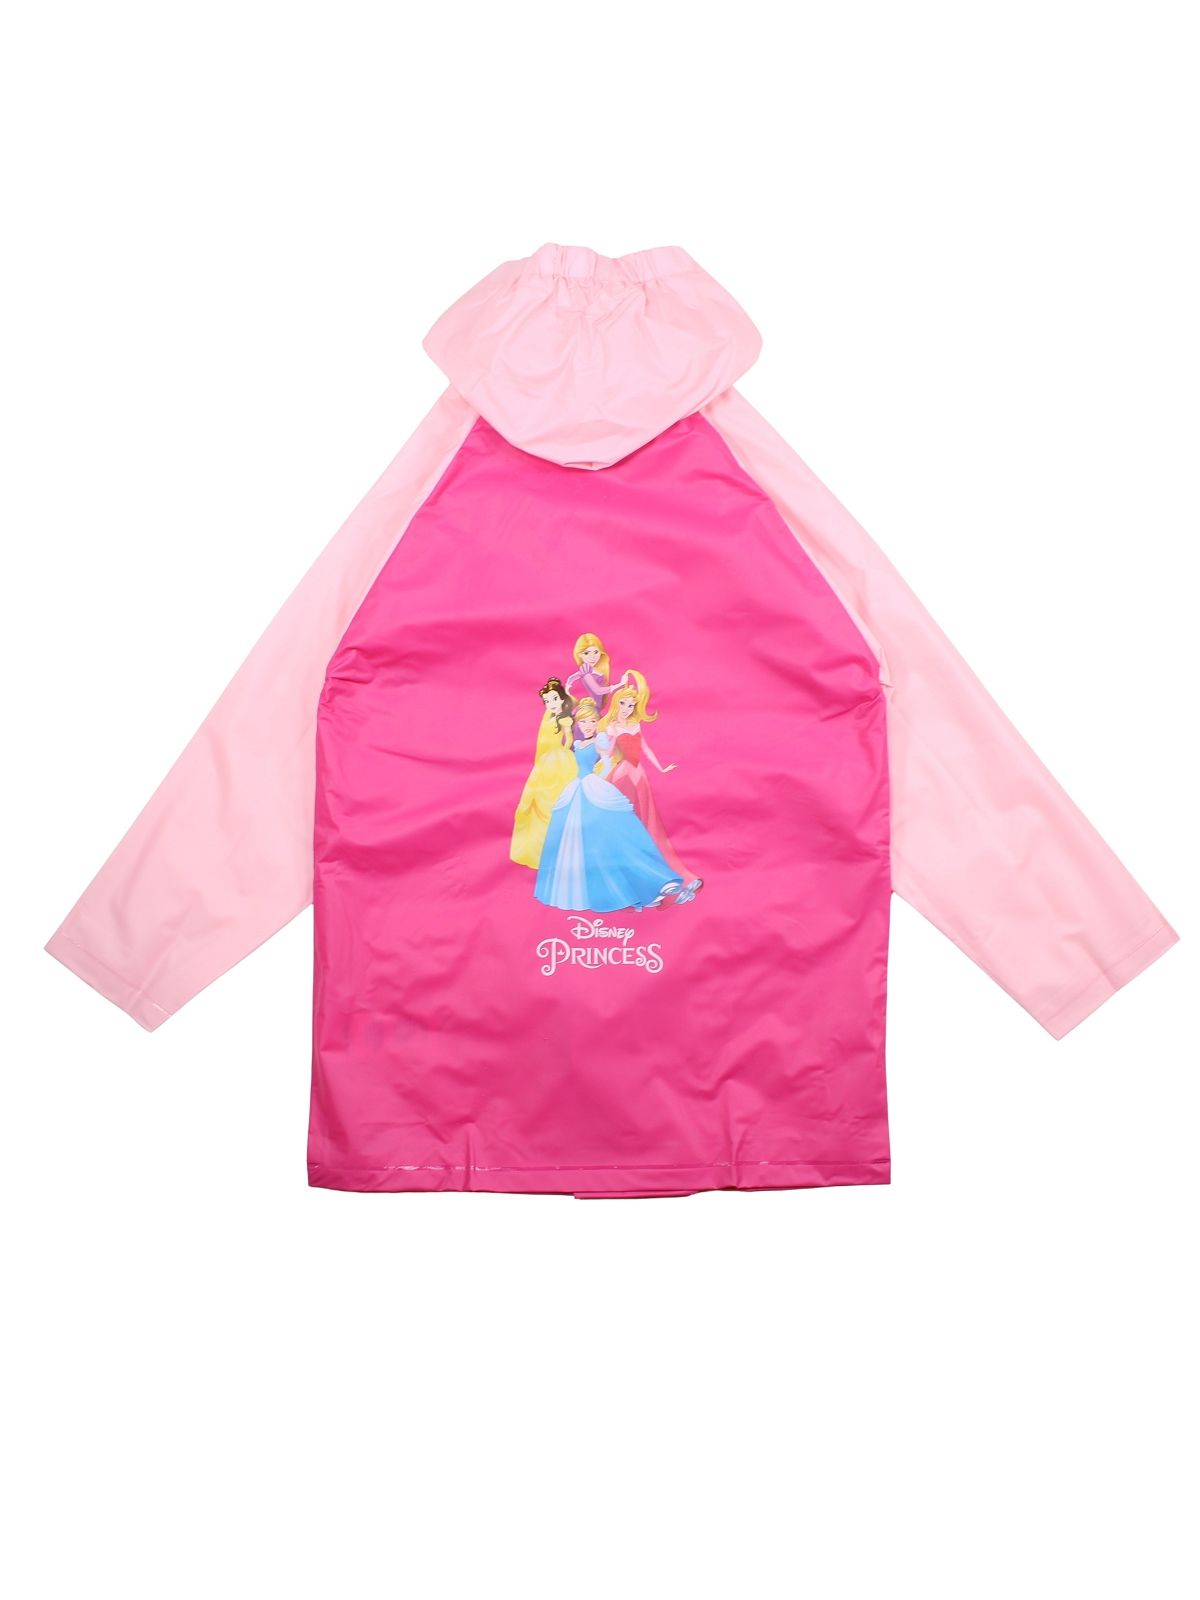 Princess raincoat